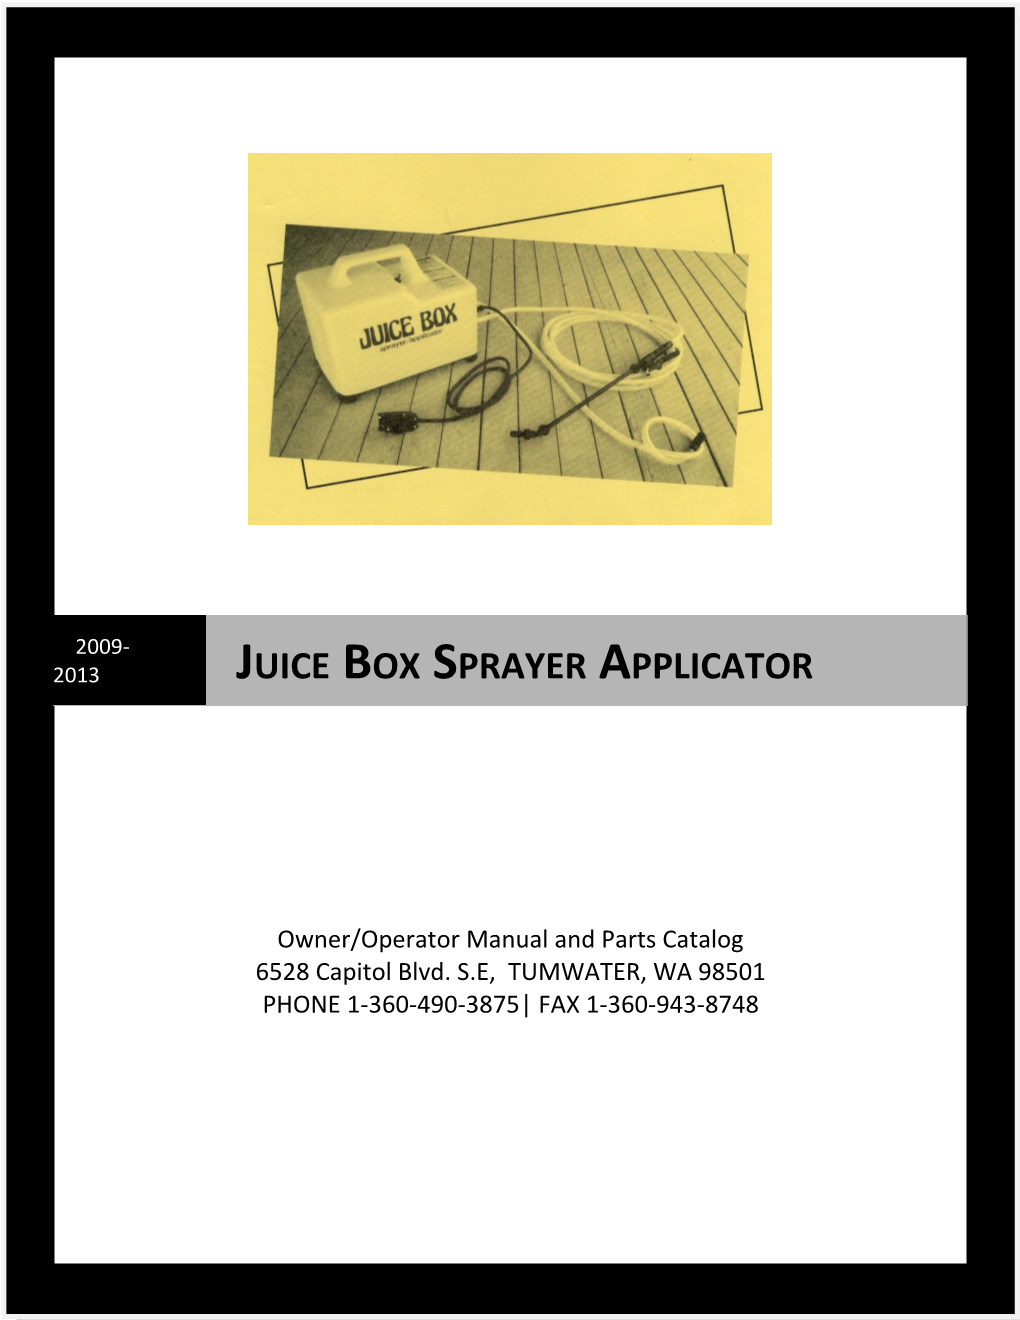 Juice Box Sprayer Applicator